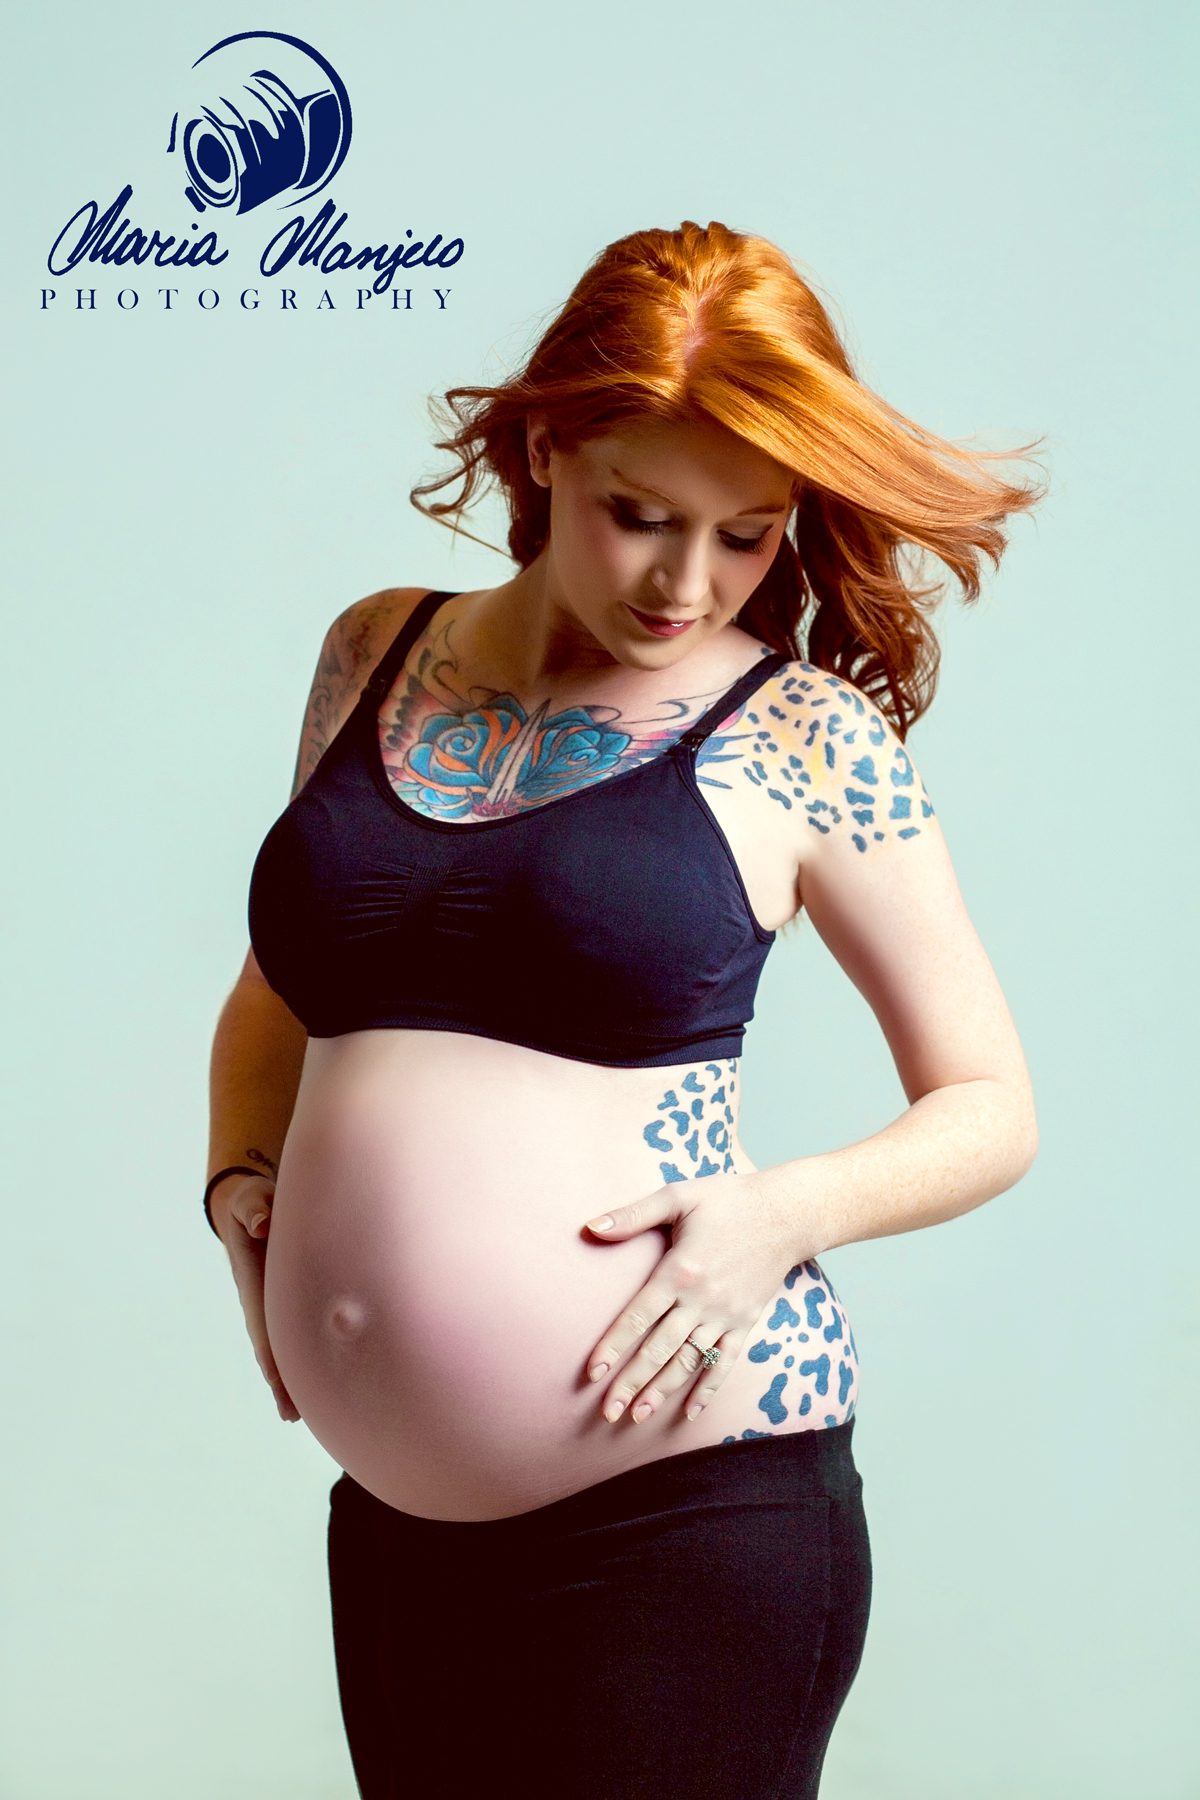 Sexy Pregnant Redhead